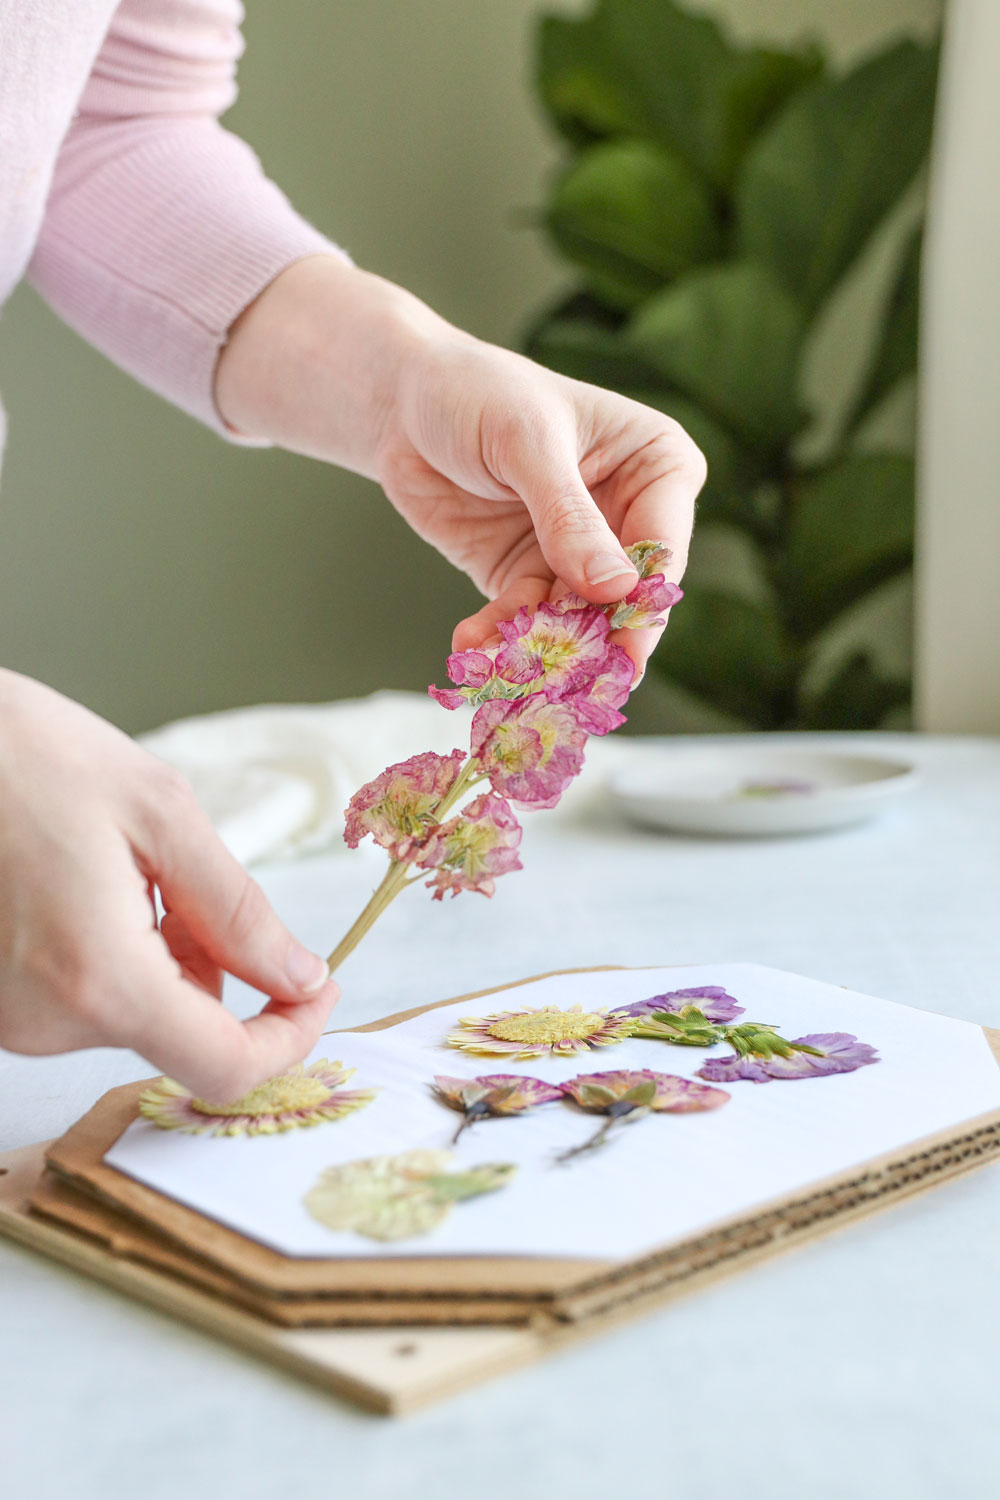 How To Press Flowers + Make a DIY Flower Press